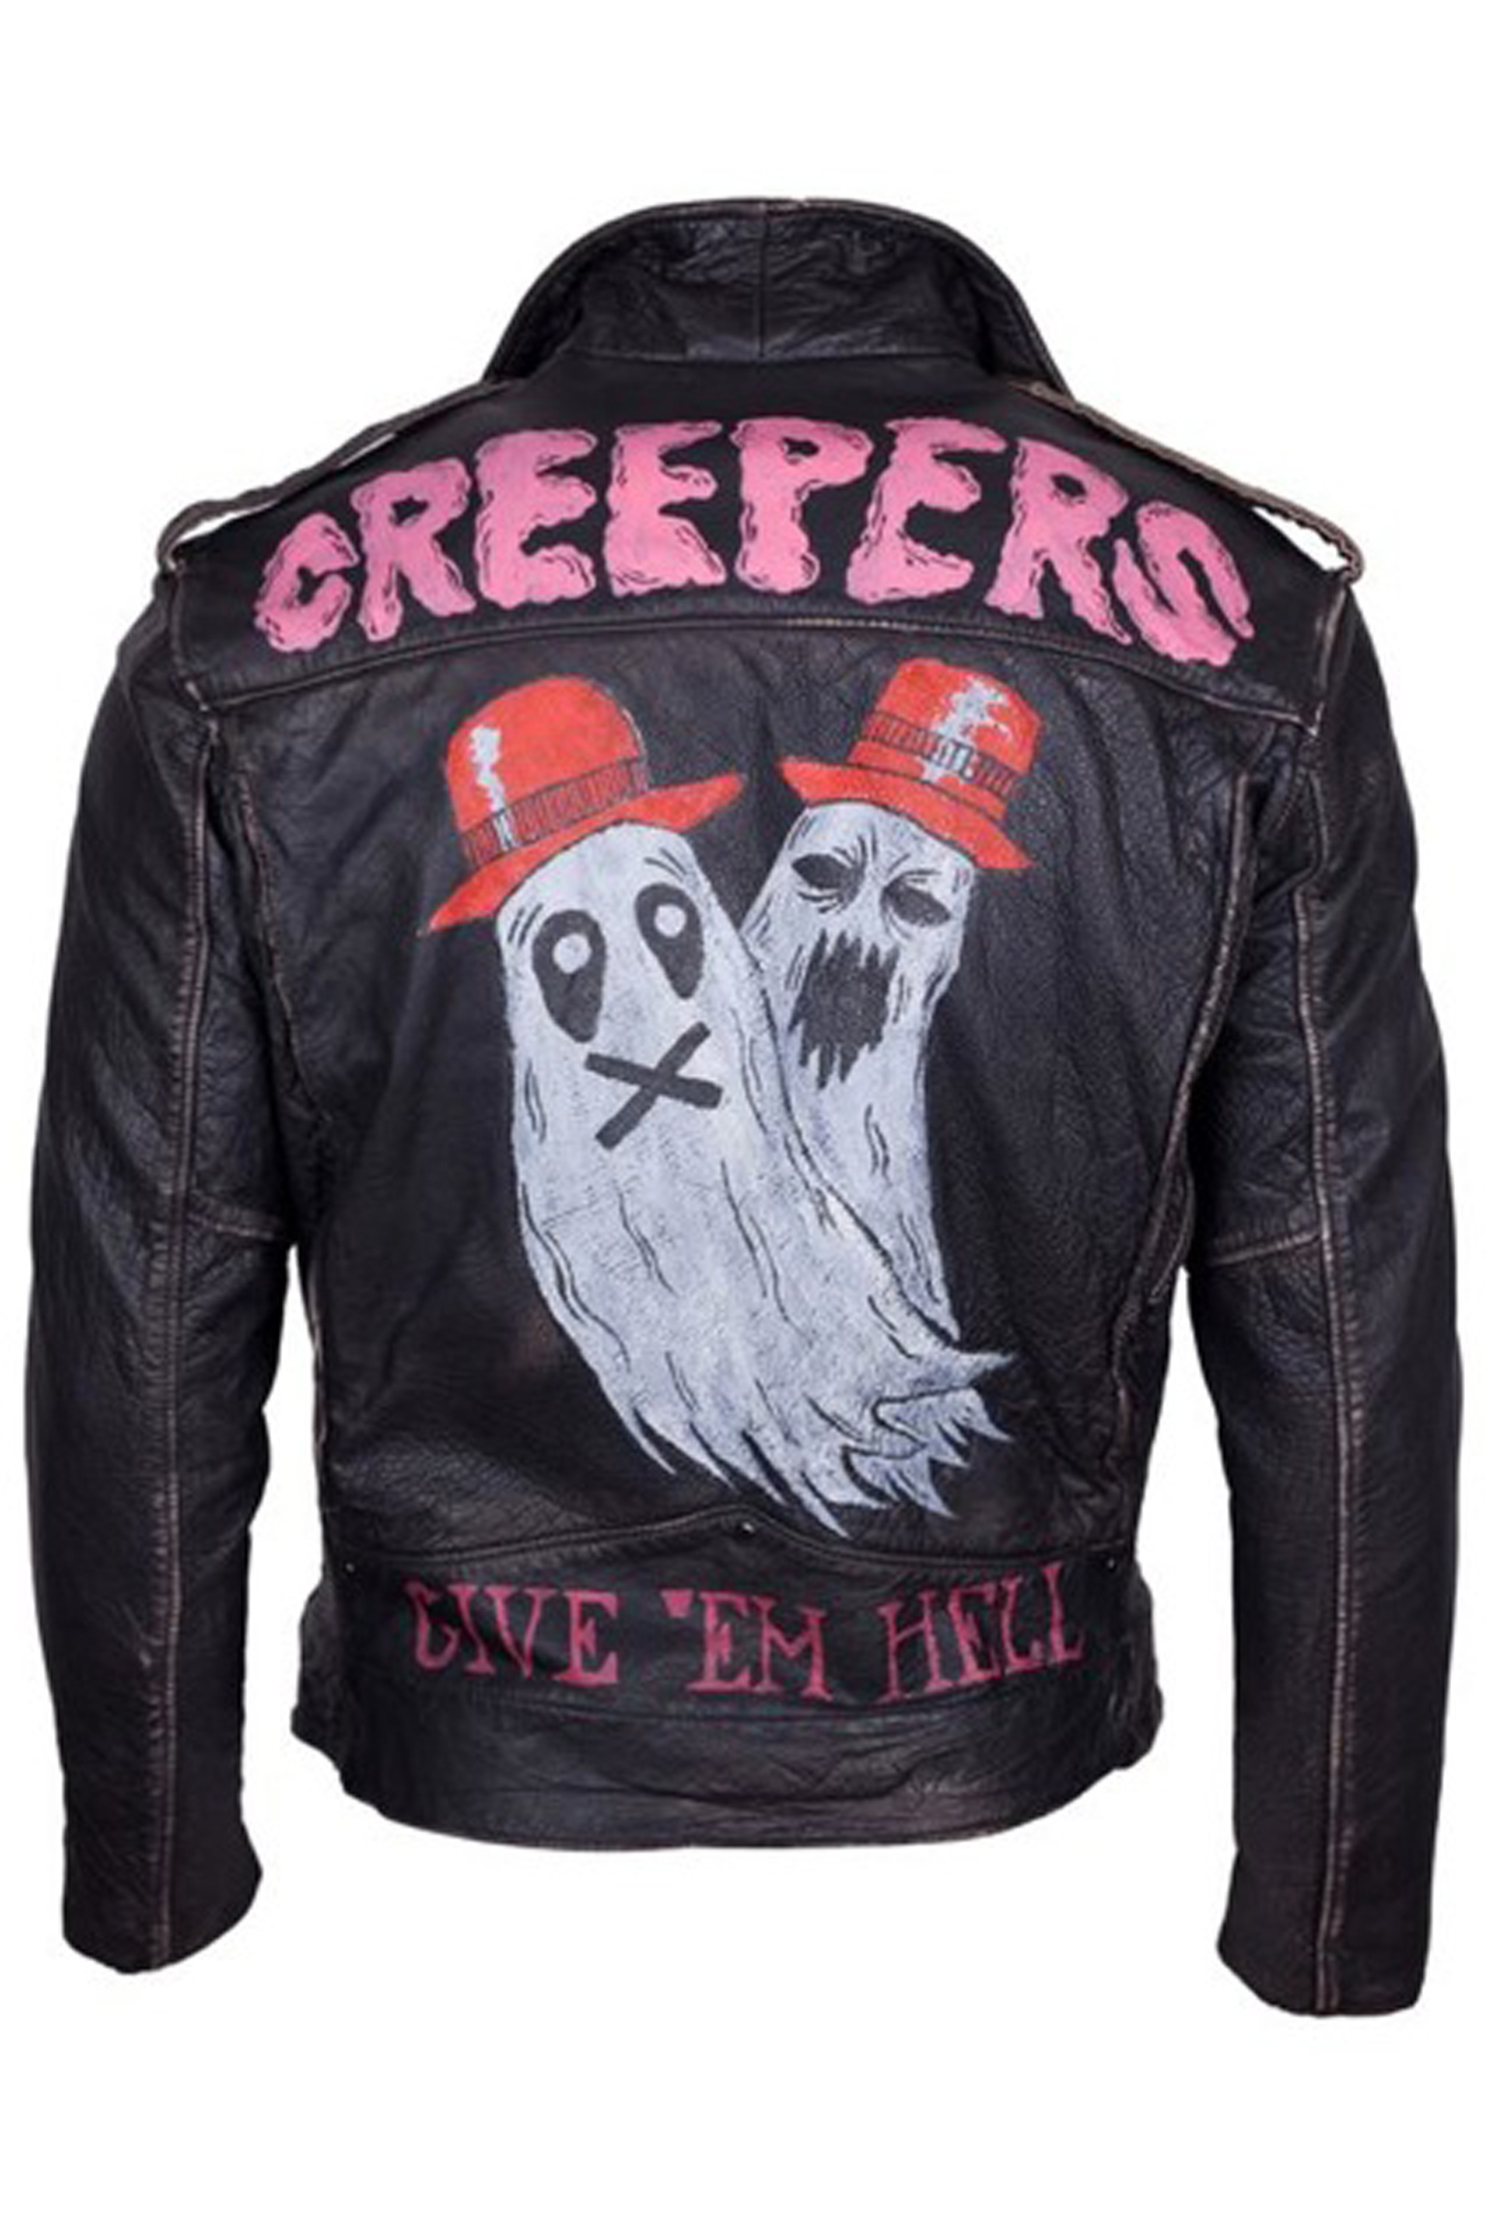 Creepers / Levi's Jacket